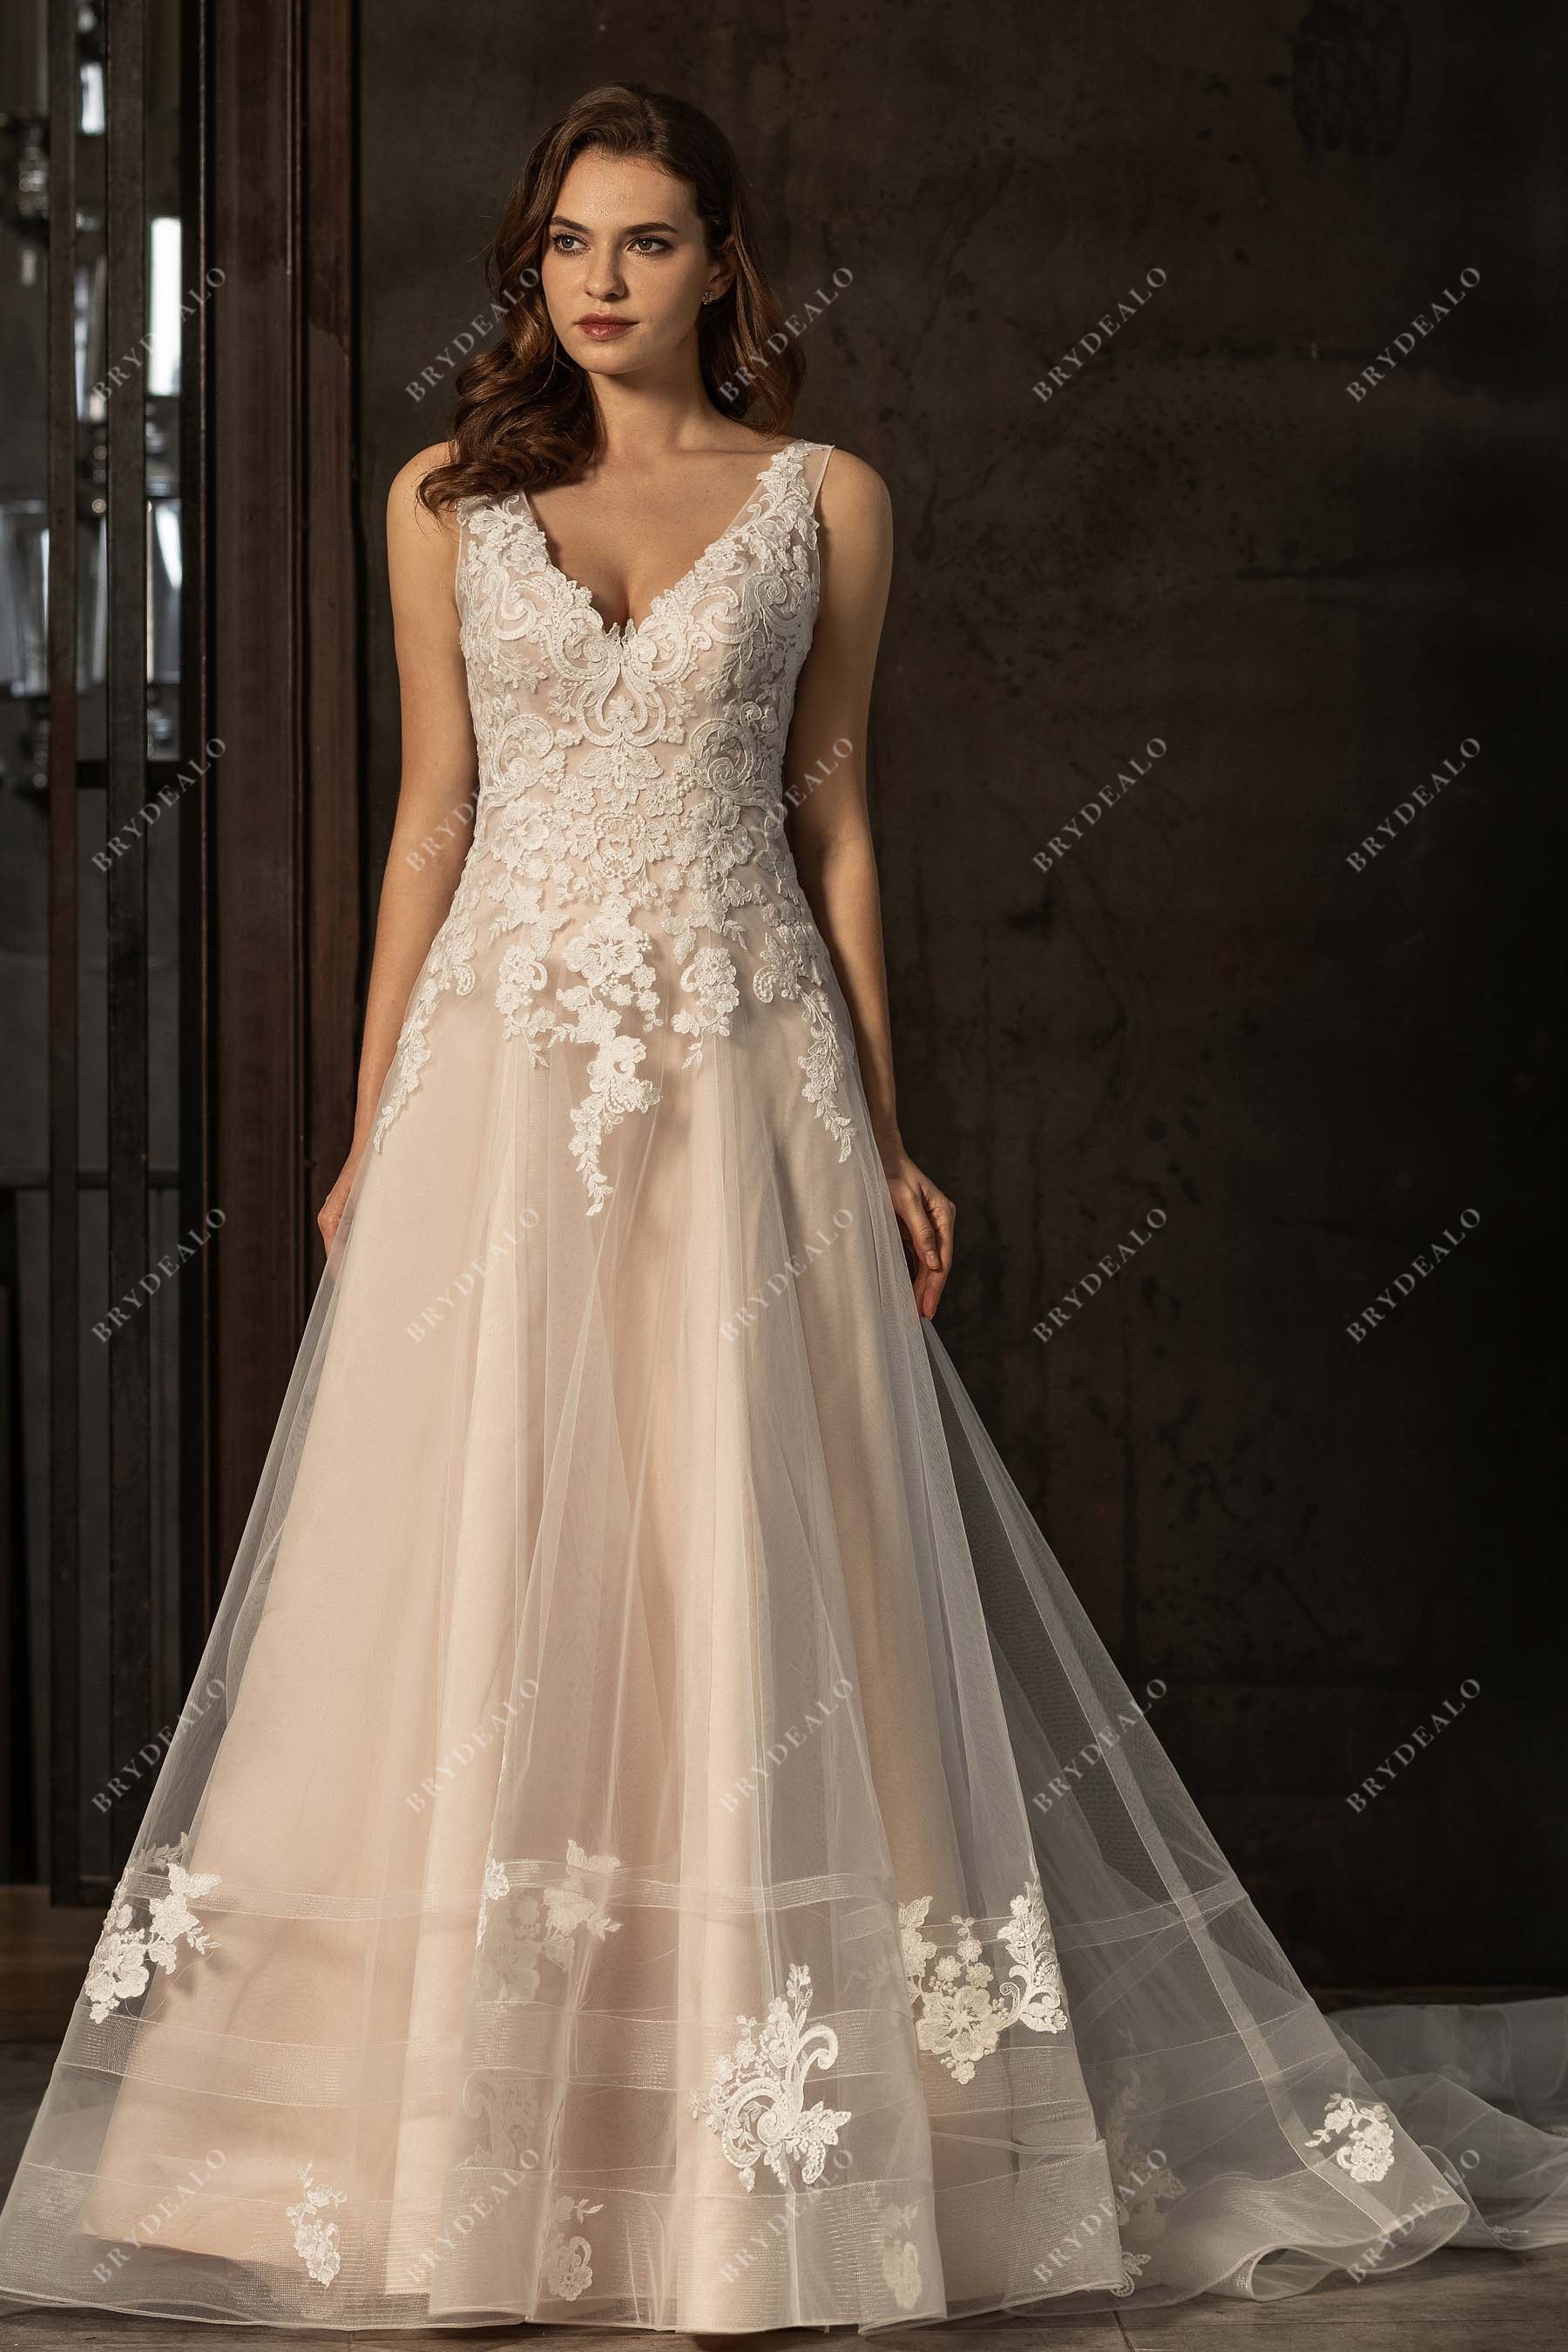 https://cdn.shopify.com/s/files/1/0617/3602/6361/products/V-neck-Sleeveless-Appliqued-Tulle-A-line-Wedding-Dress.jpg?v=1676355319&width=1800